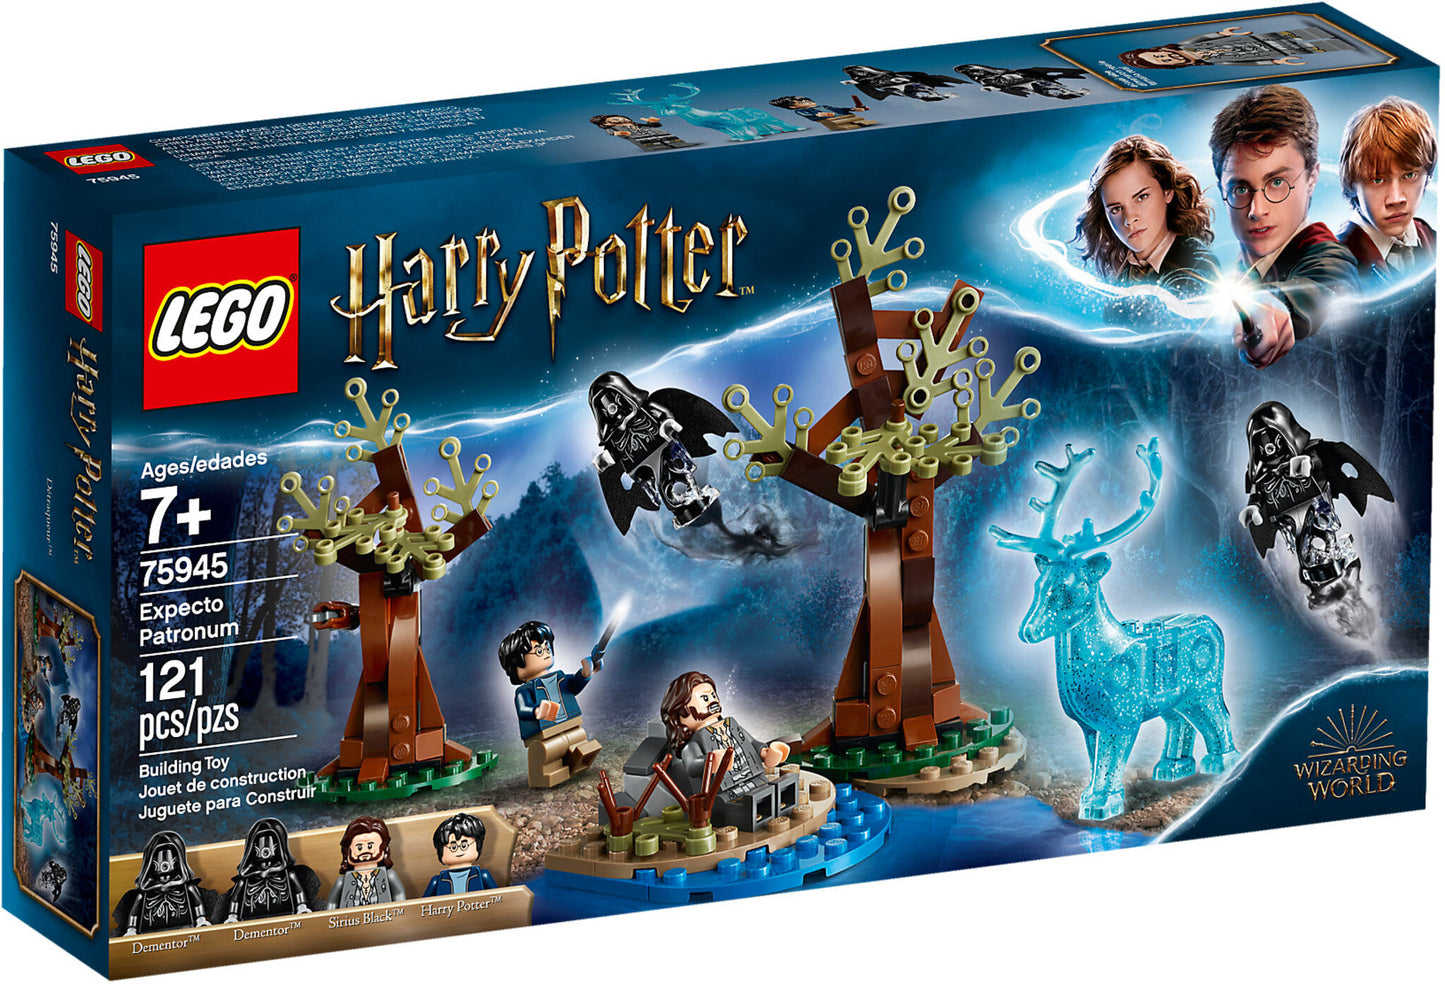 75945 LEGO Harry Potter - Expecto Patronum